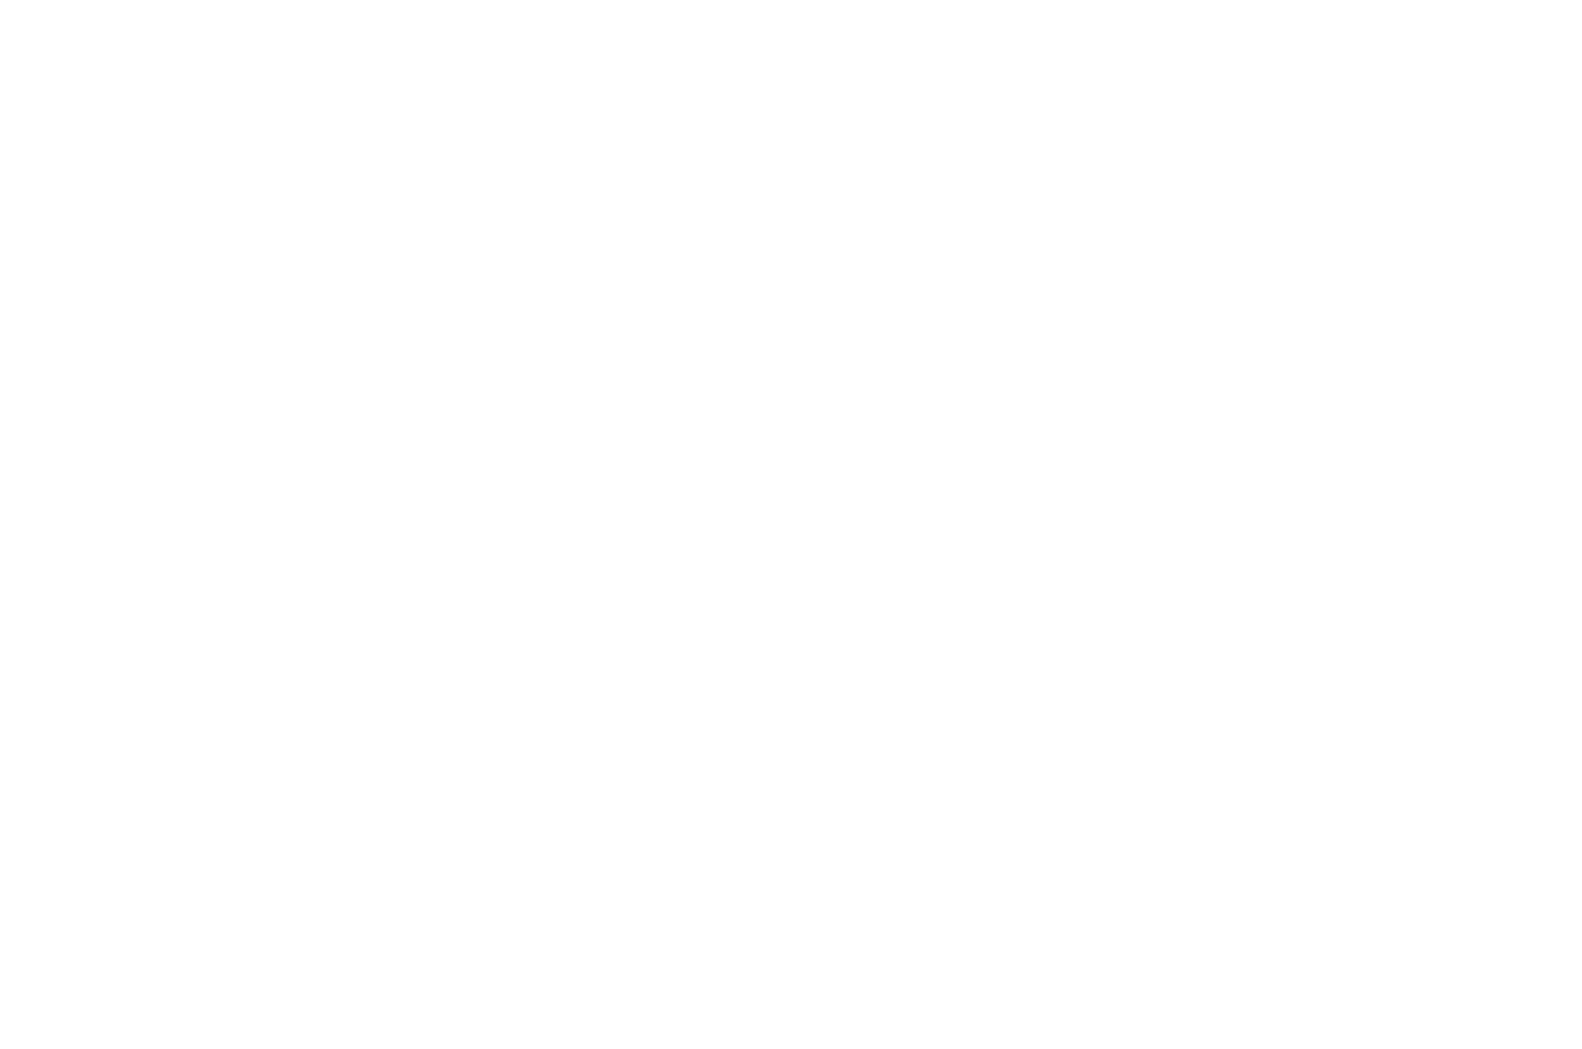 Roop Gill